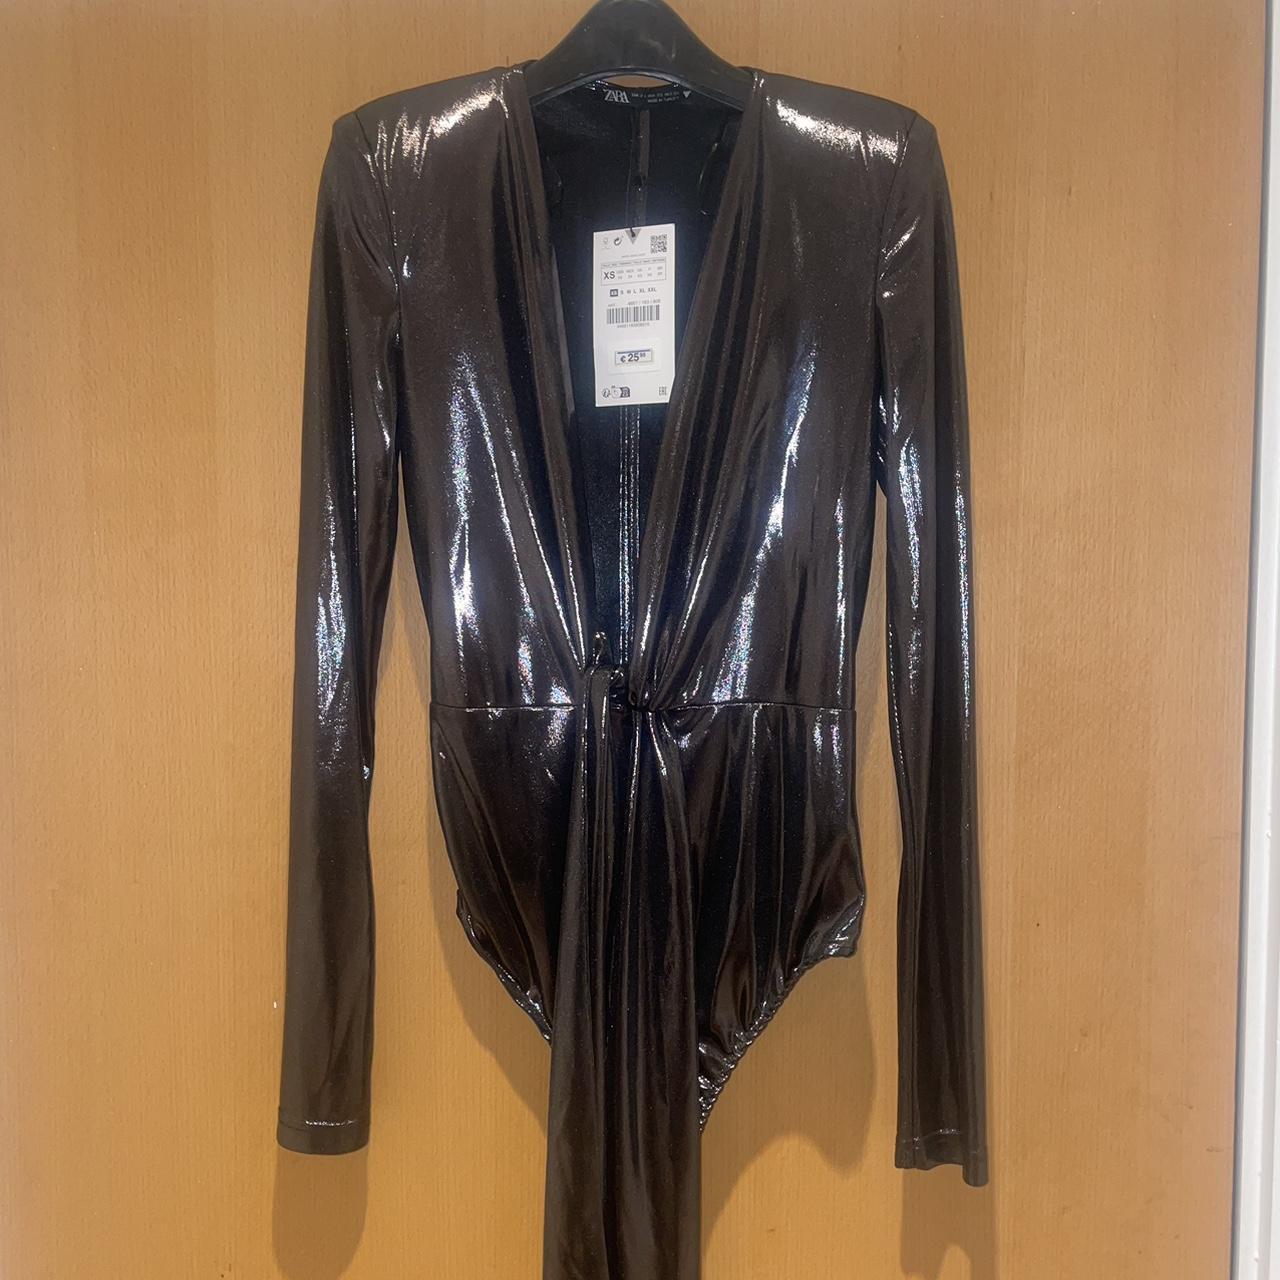 Zara - Metallic Bodysuit- (Top), Size: Medium, color: Metalllic